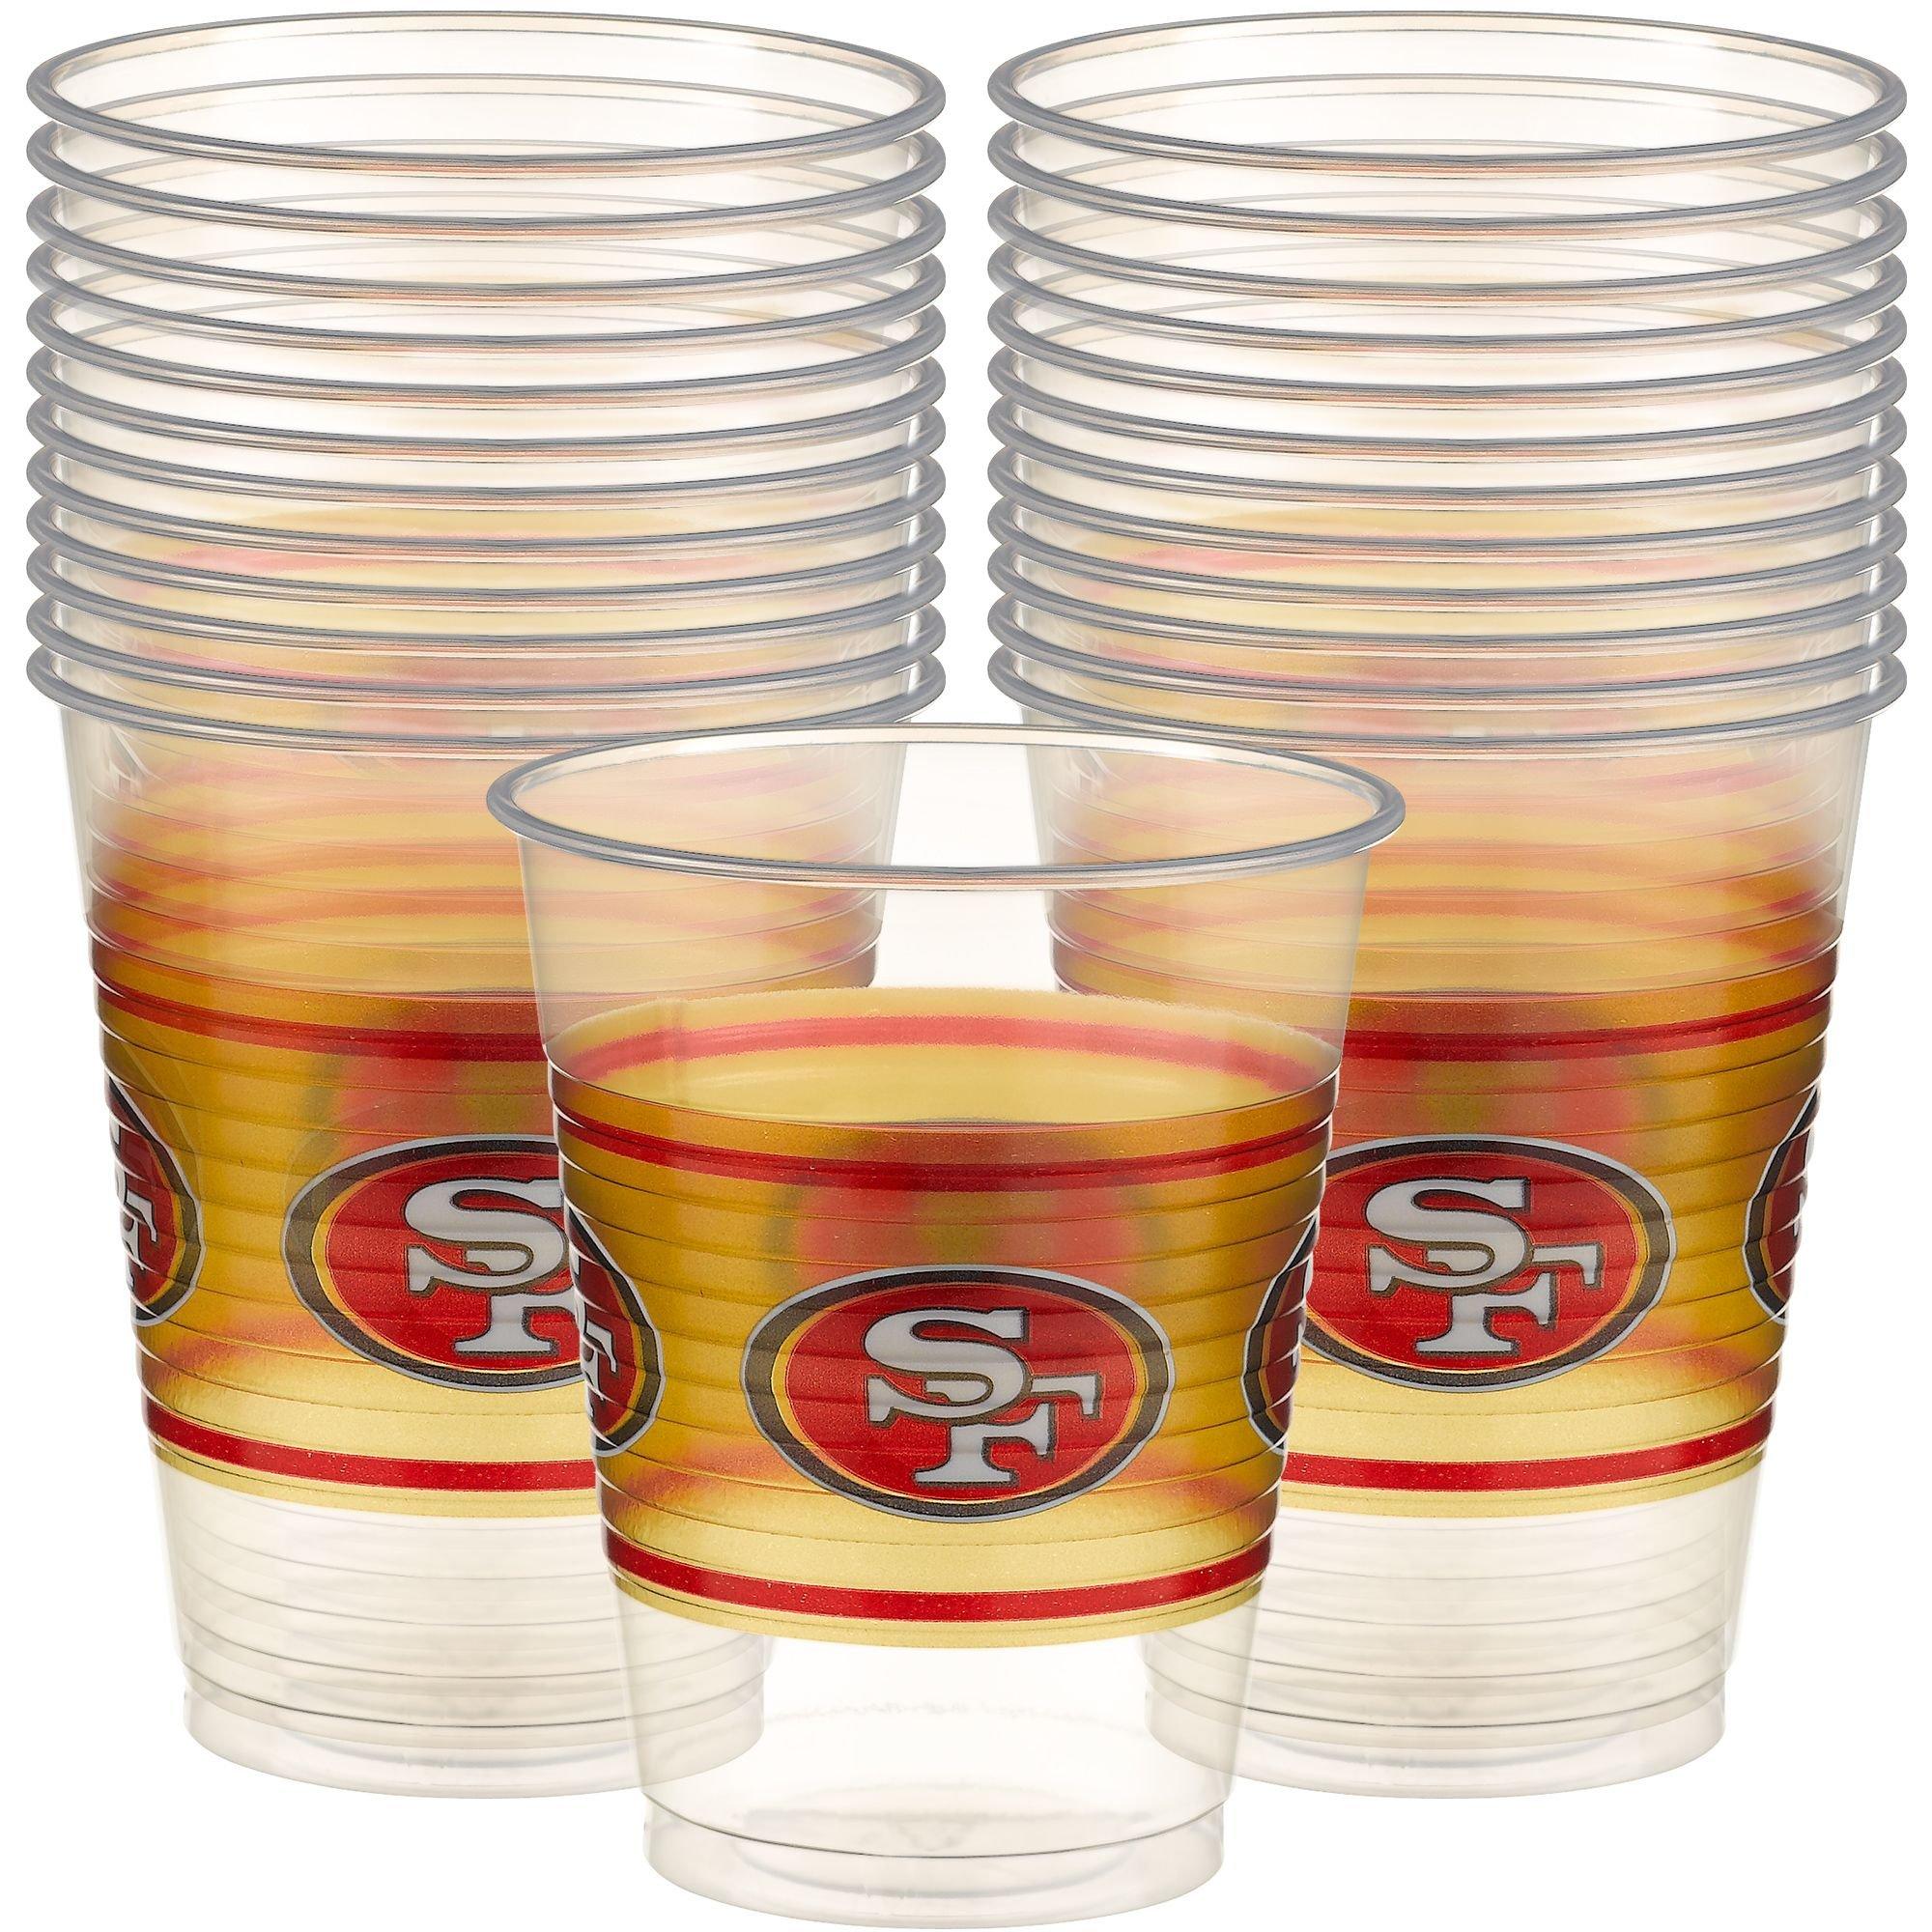 San Francisco 49ers Souvenir Cup